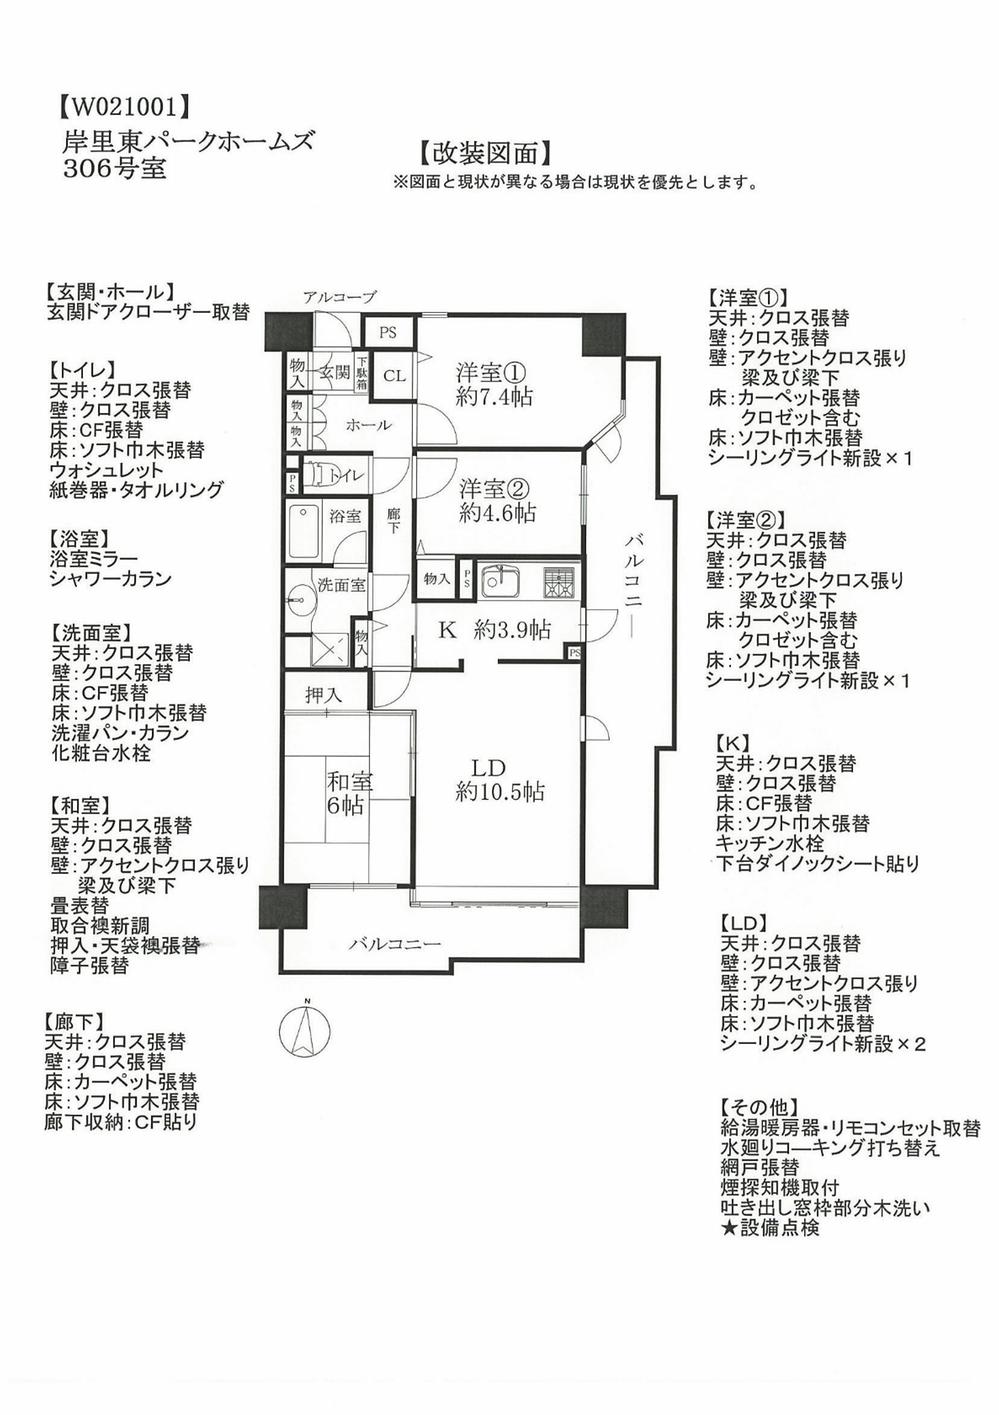 Floor plan. 3LDK, Price 18.5 million yen, Occupied area 75.68 sq m , Balcony area 25.92 sq m